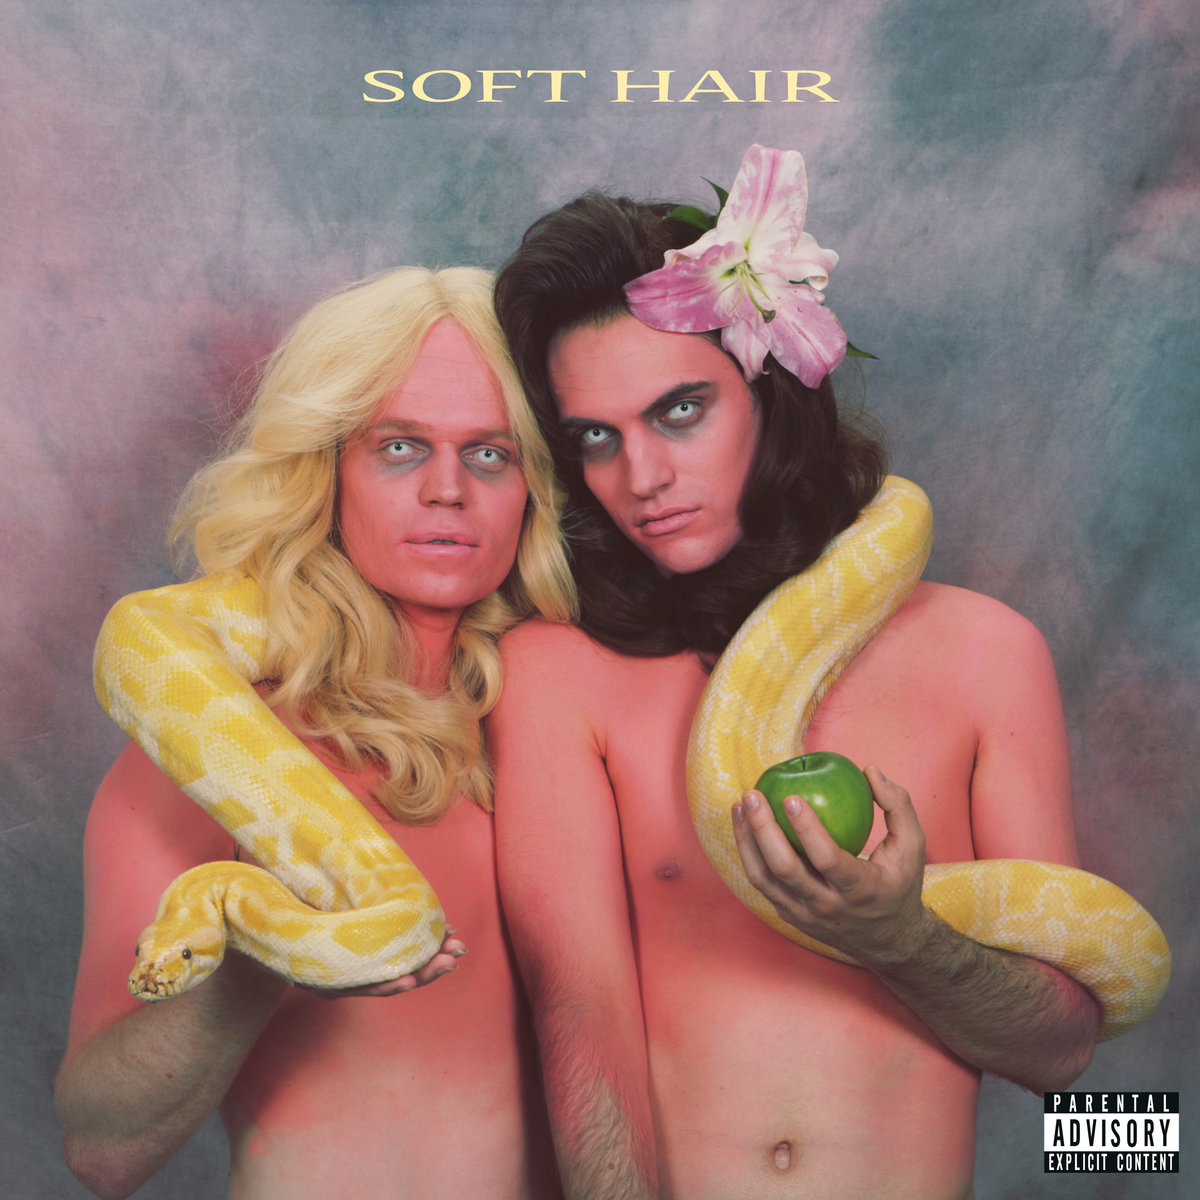 'Soft Hair' by Soft Hair, album review by Dan Geddes.